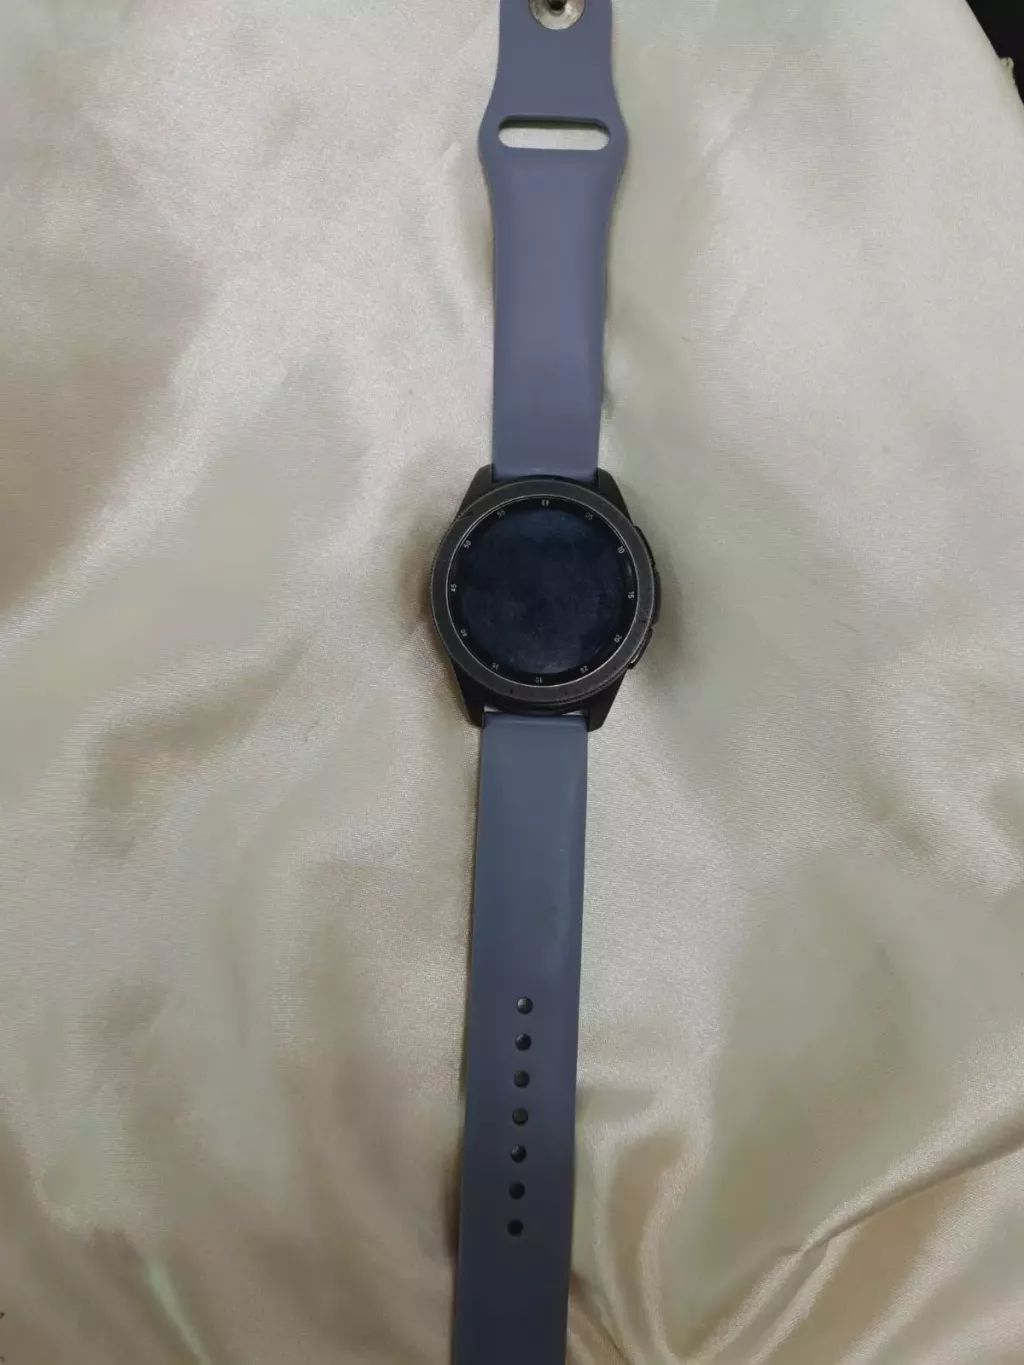 Купить б/у Часы Samsung Galaxy Watch 42 mm  Костанай 1003, лот 240905-0